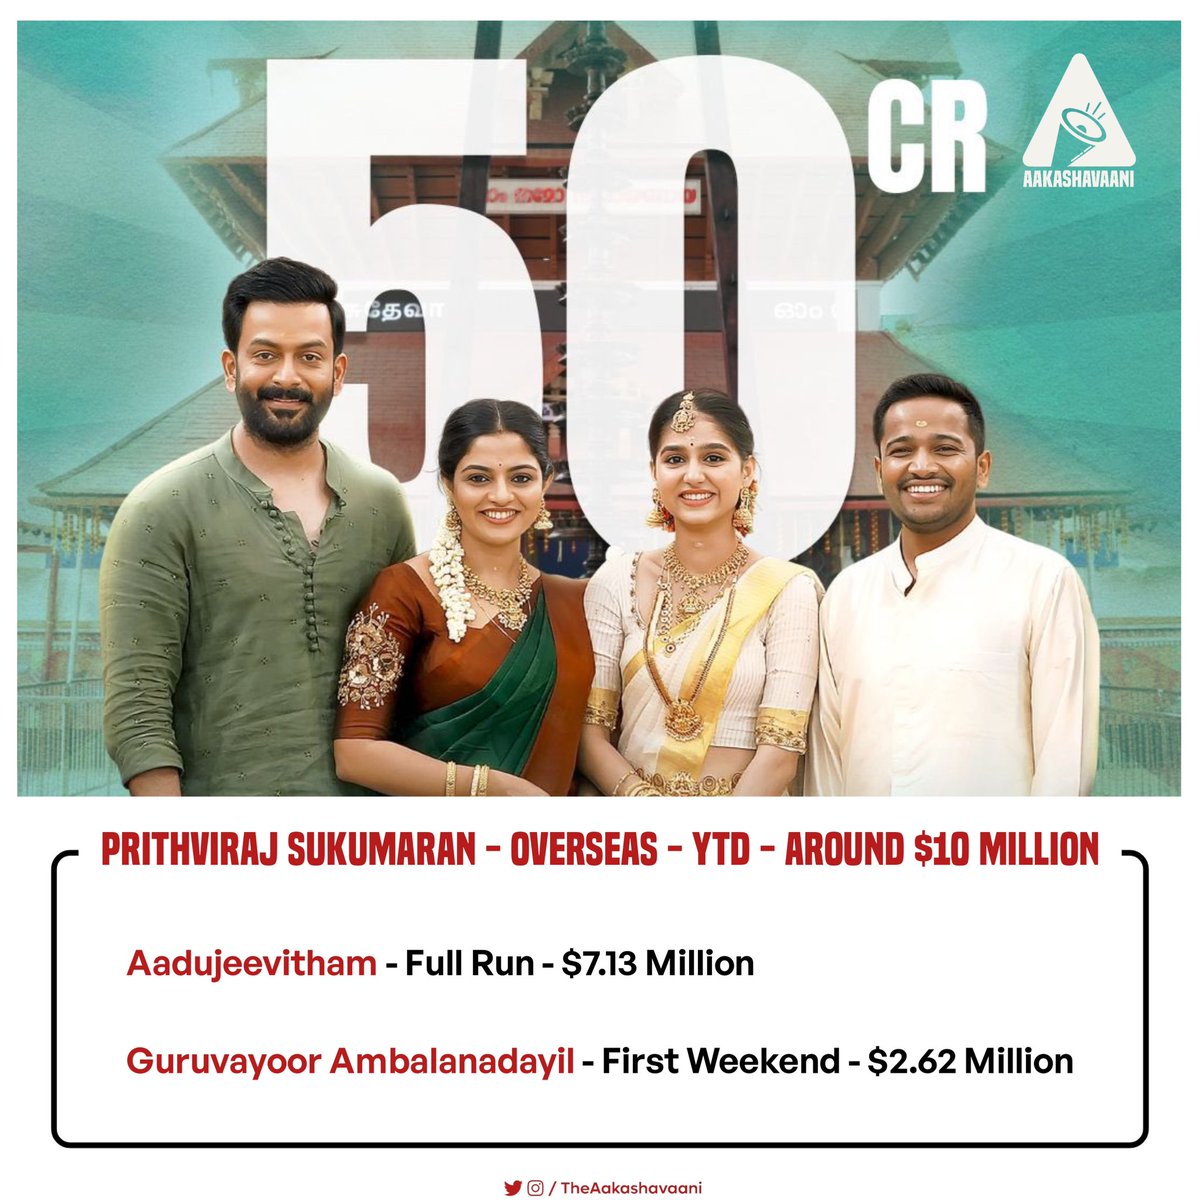 #PrithvirajSukumaran - Overseas - Delivered Two Blockbuster Films So Far This Year.